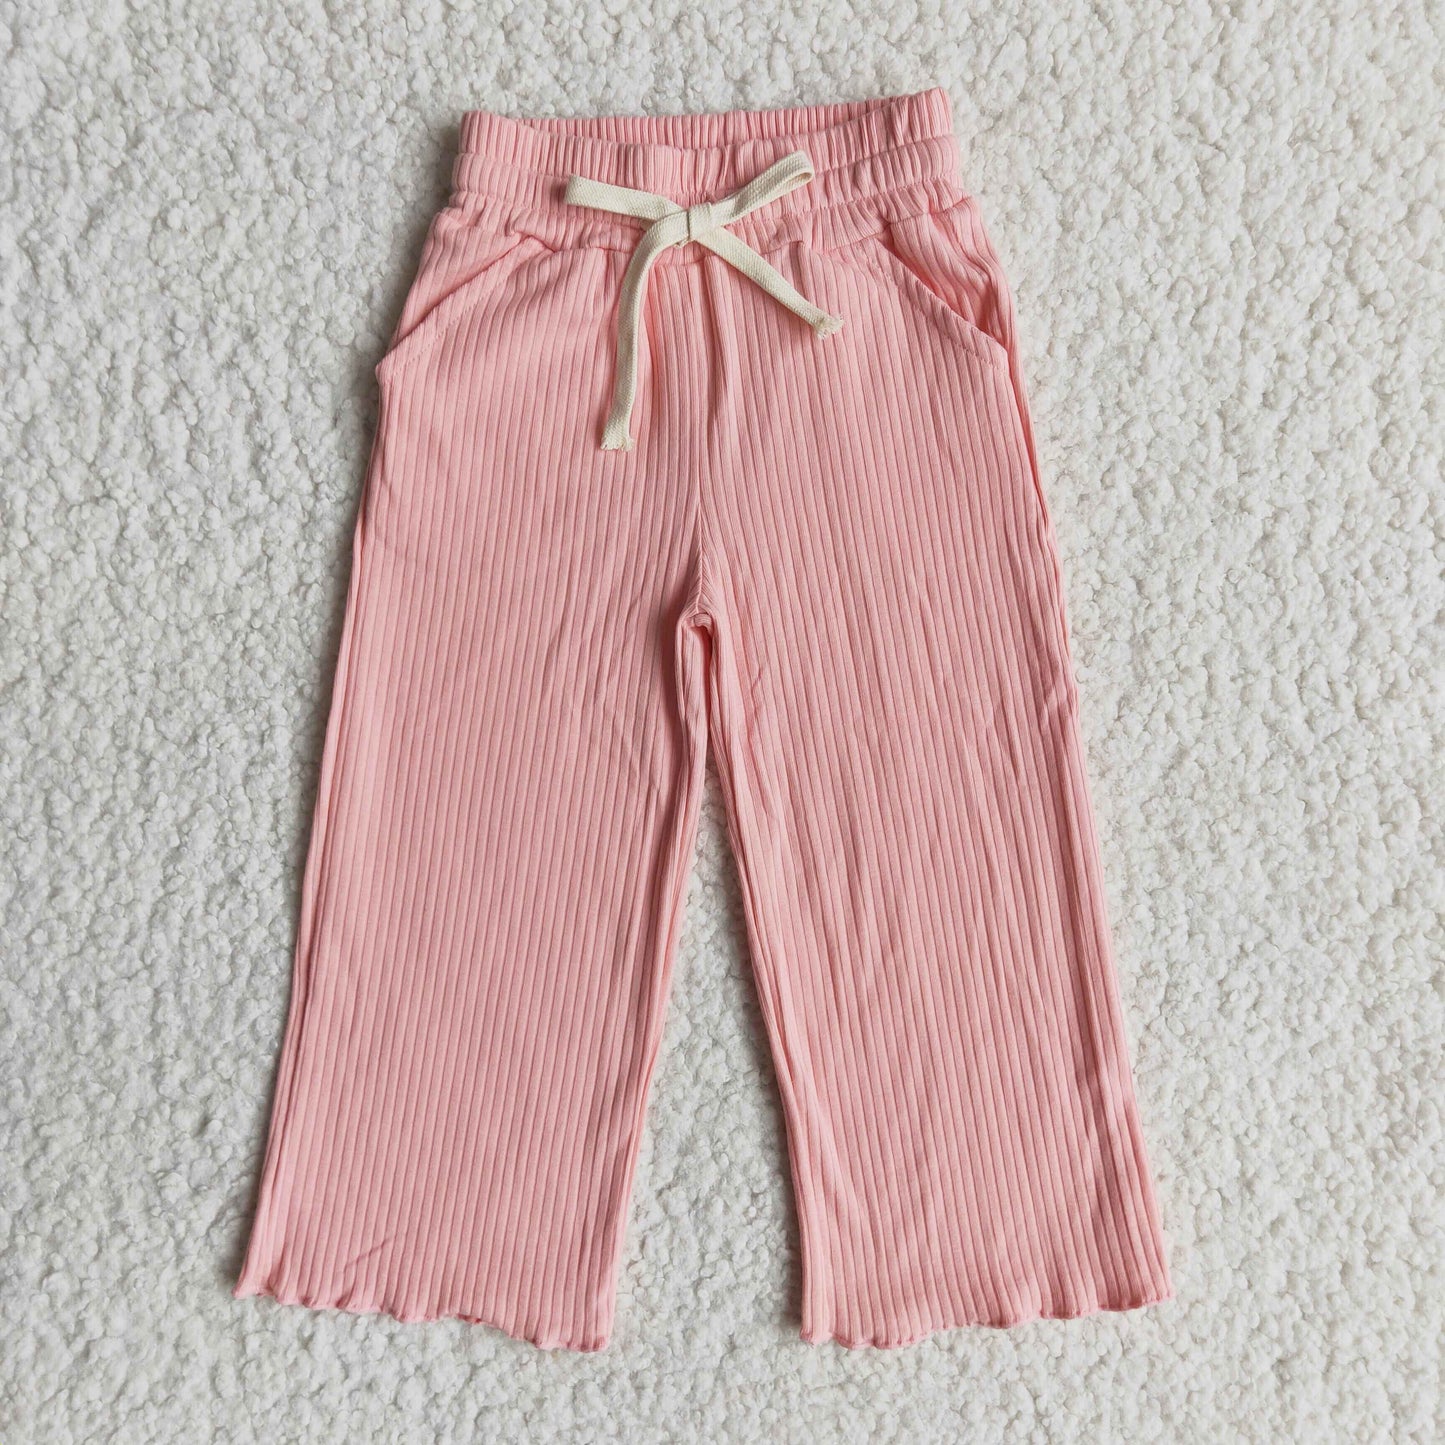 Peach stripe cotton elastic waistband pants